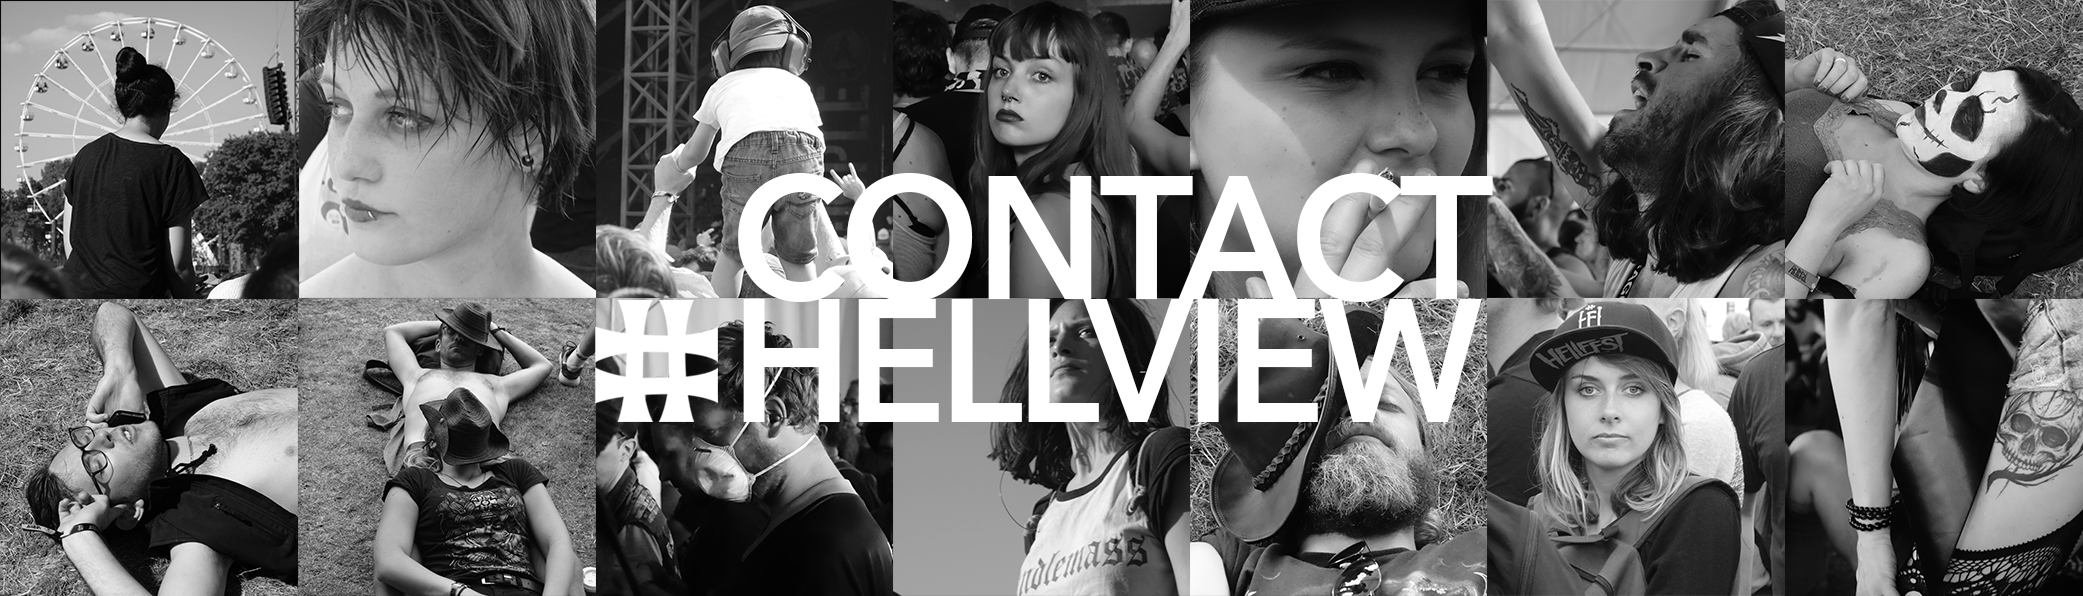 contact-photographe-hesfest-hellview